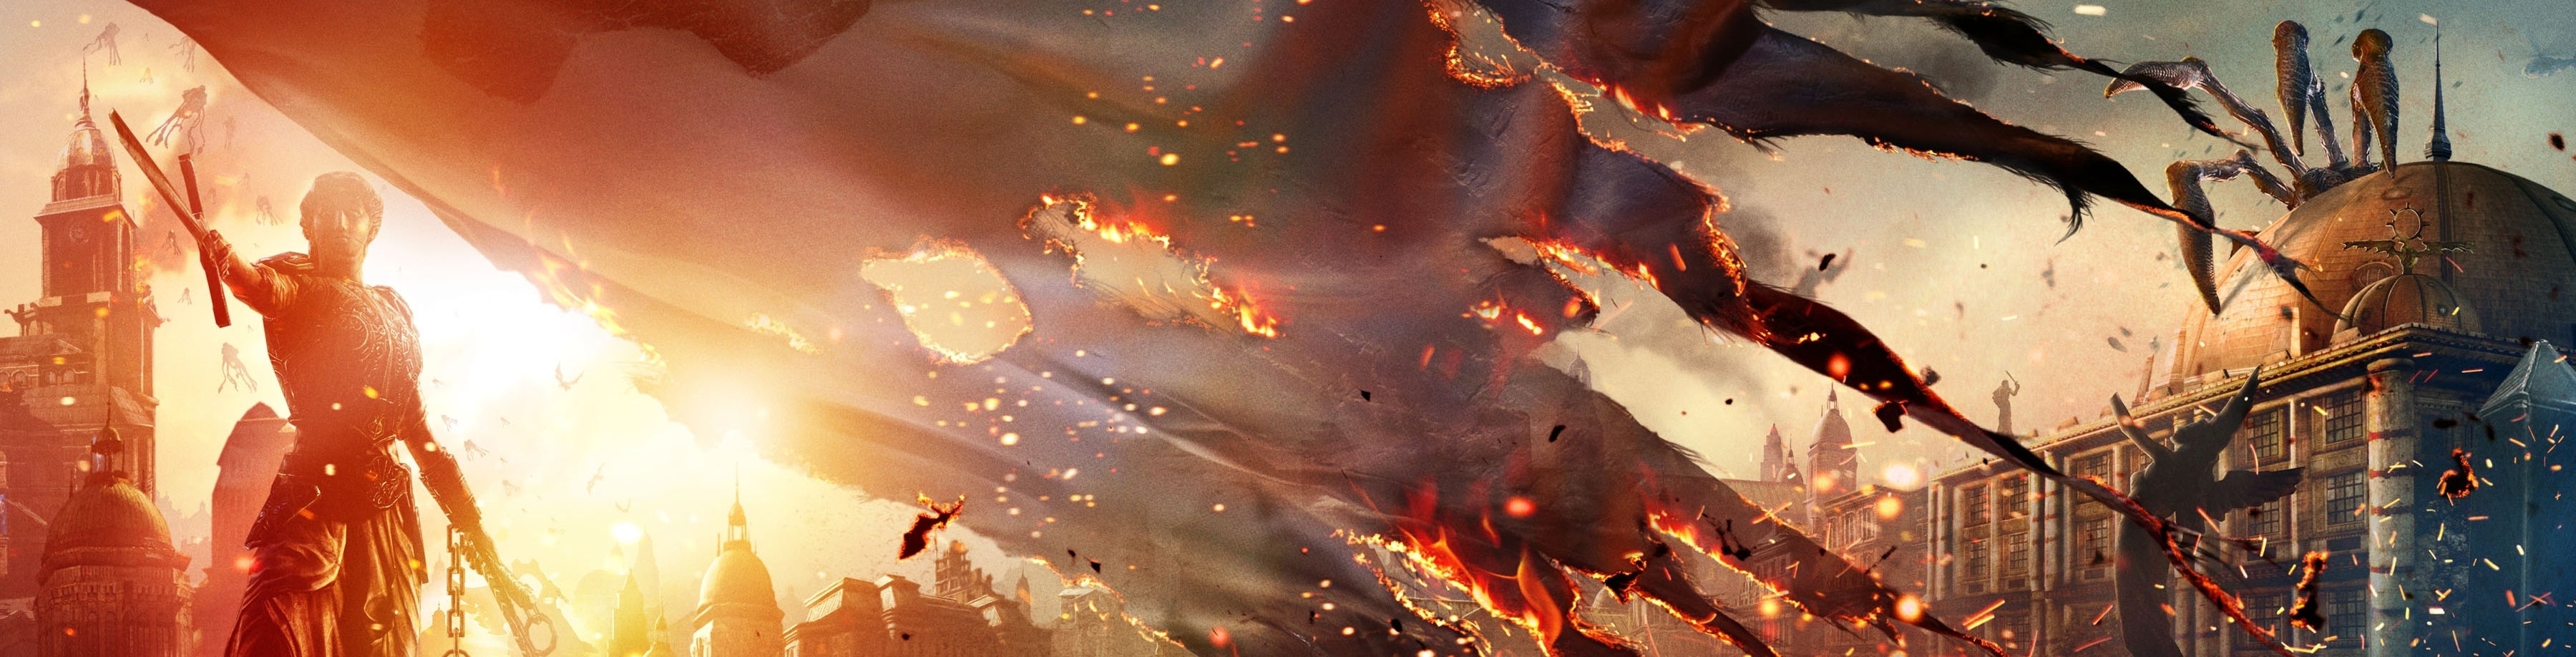 Obrazki dla Gears of War: Judgment - Recenzja